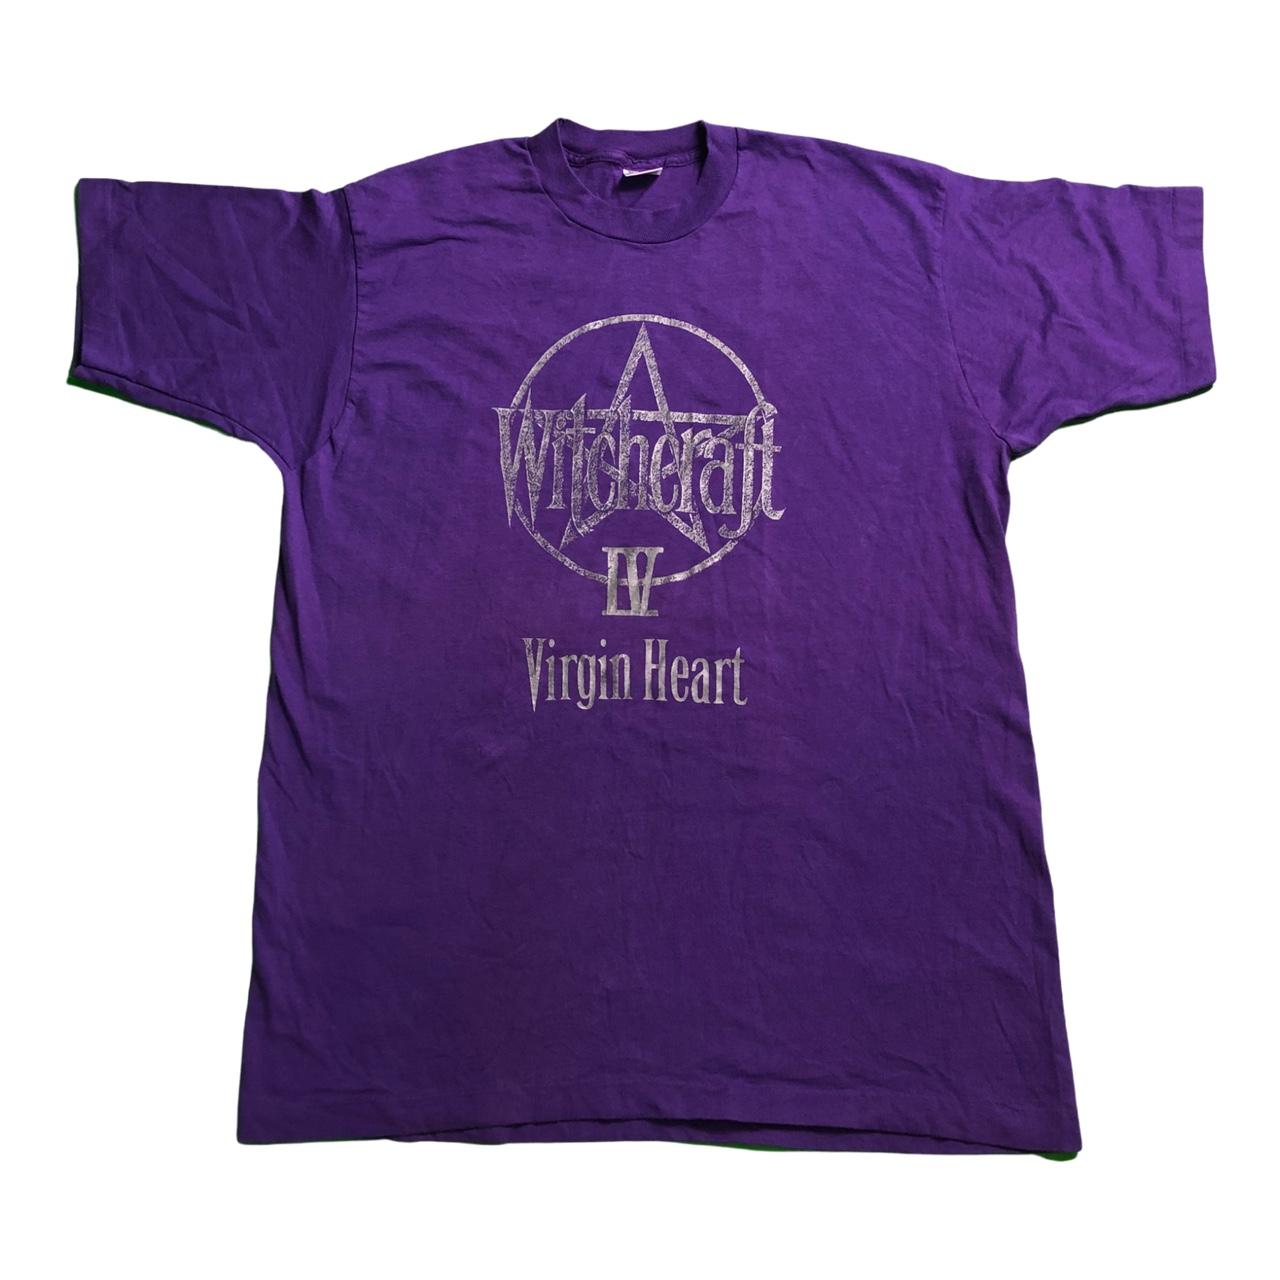 American Vintage Men's Purple T-shirt